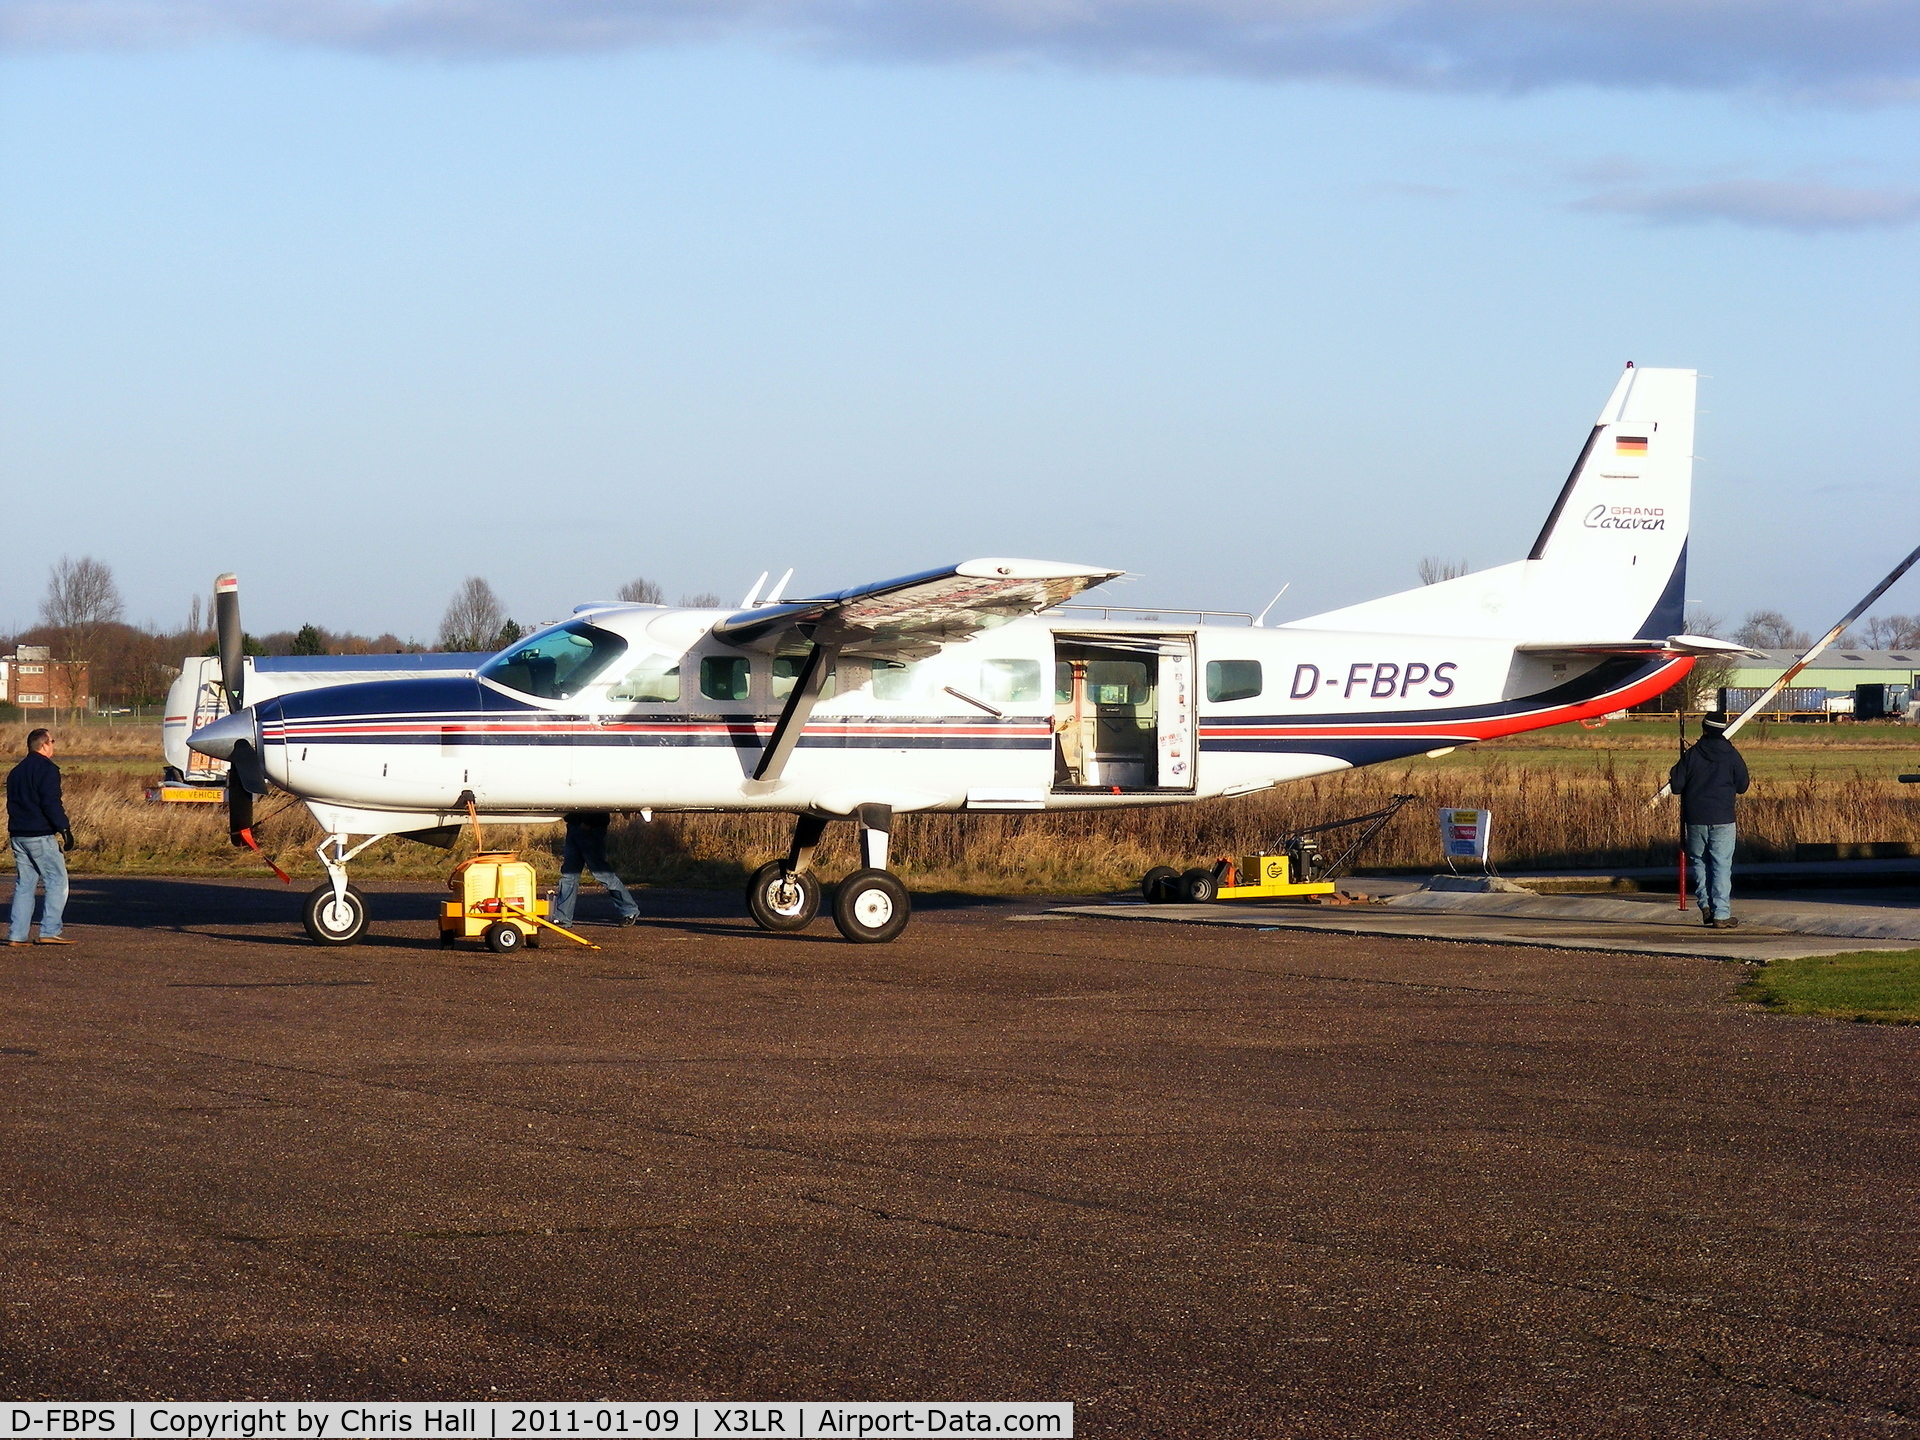 D-FBPS, 1998 Cessna 208B Grand Caravan C/N 208B0494, at the British Parachute School, Langar